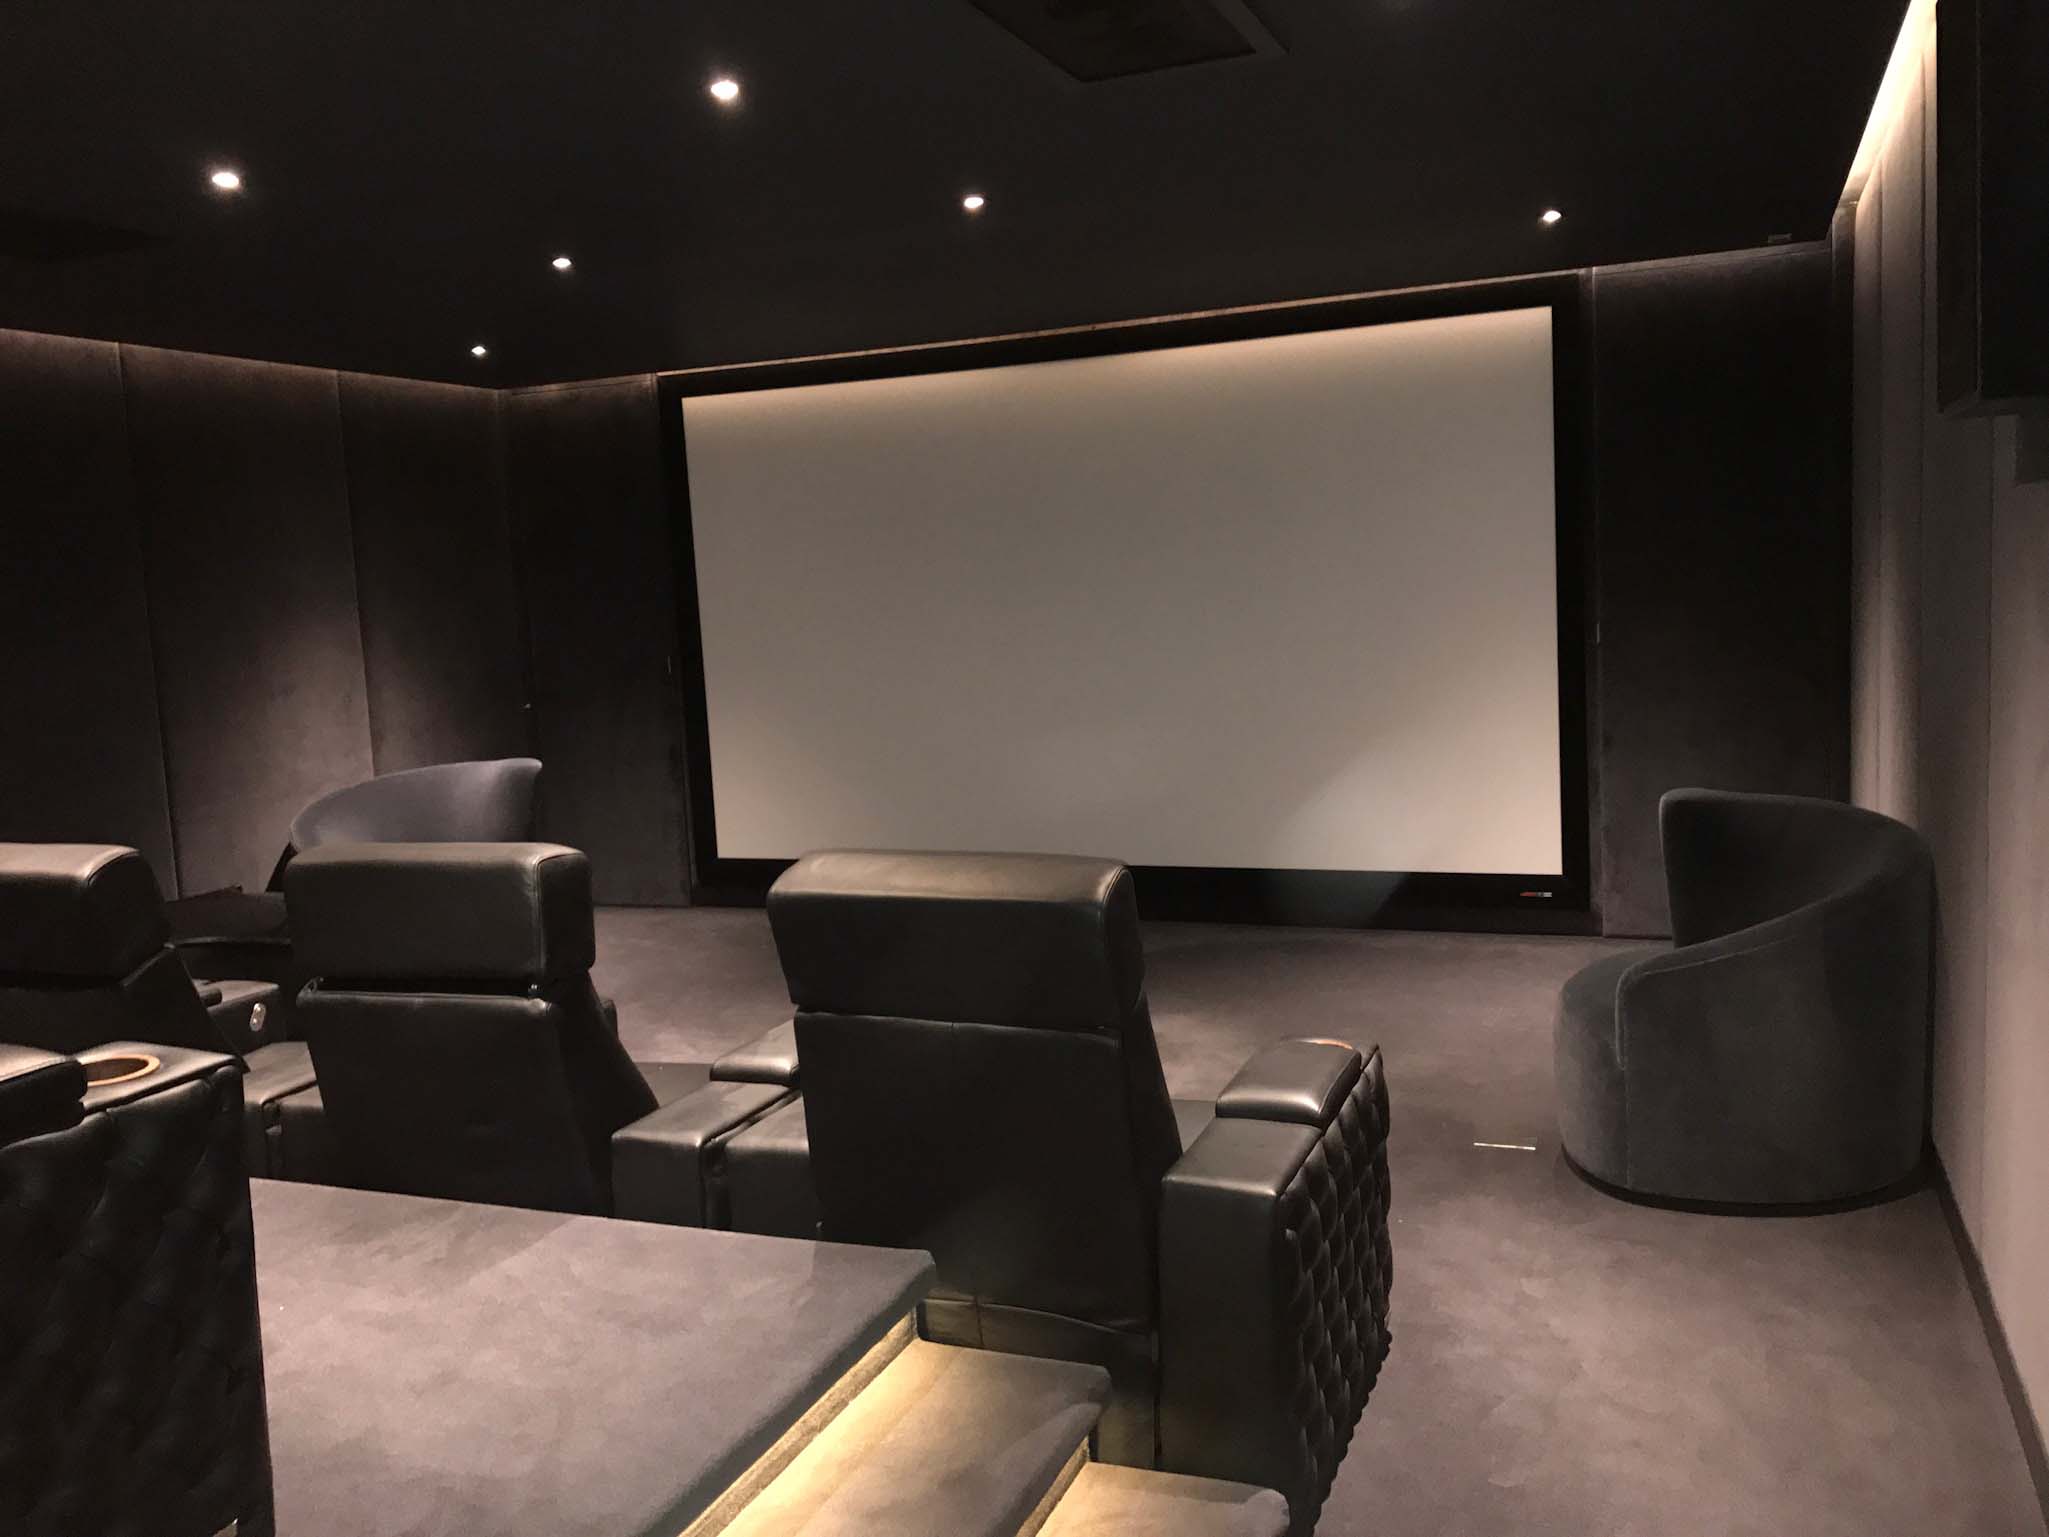 Home cinema screen